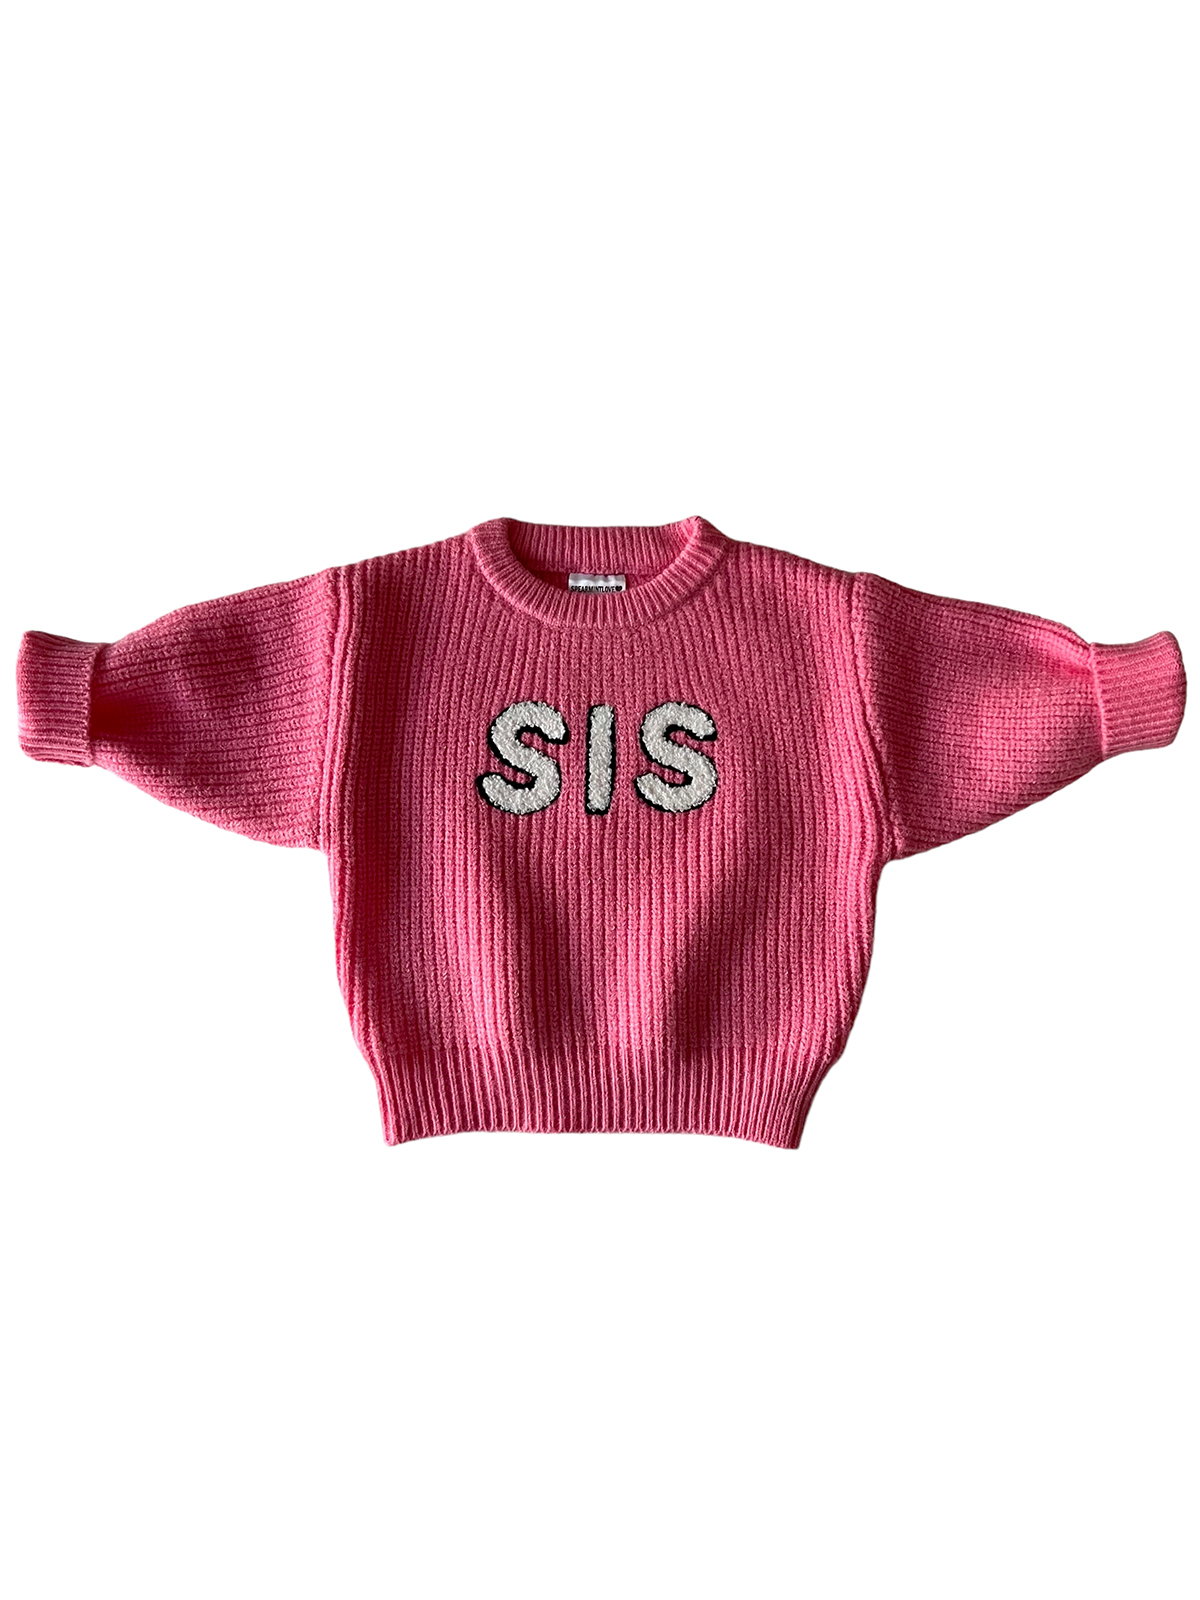 Sis Knit Sweater, Bubblegum